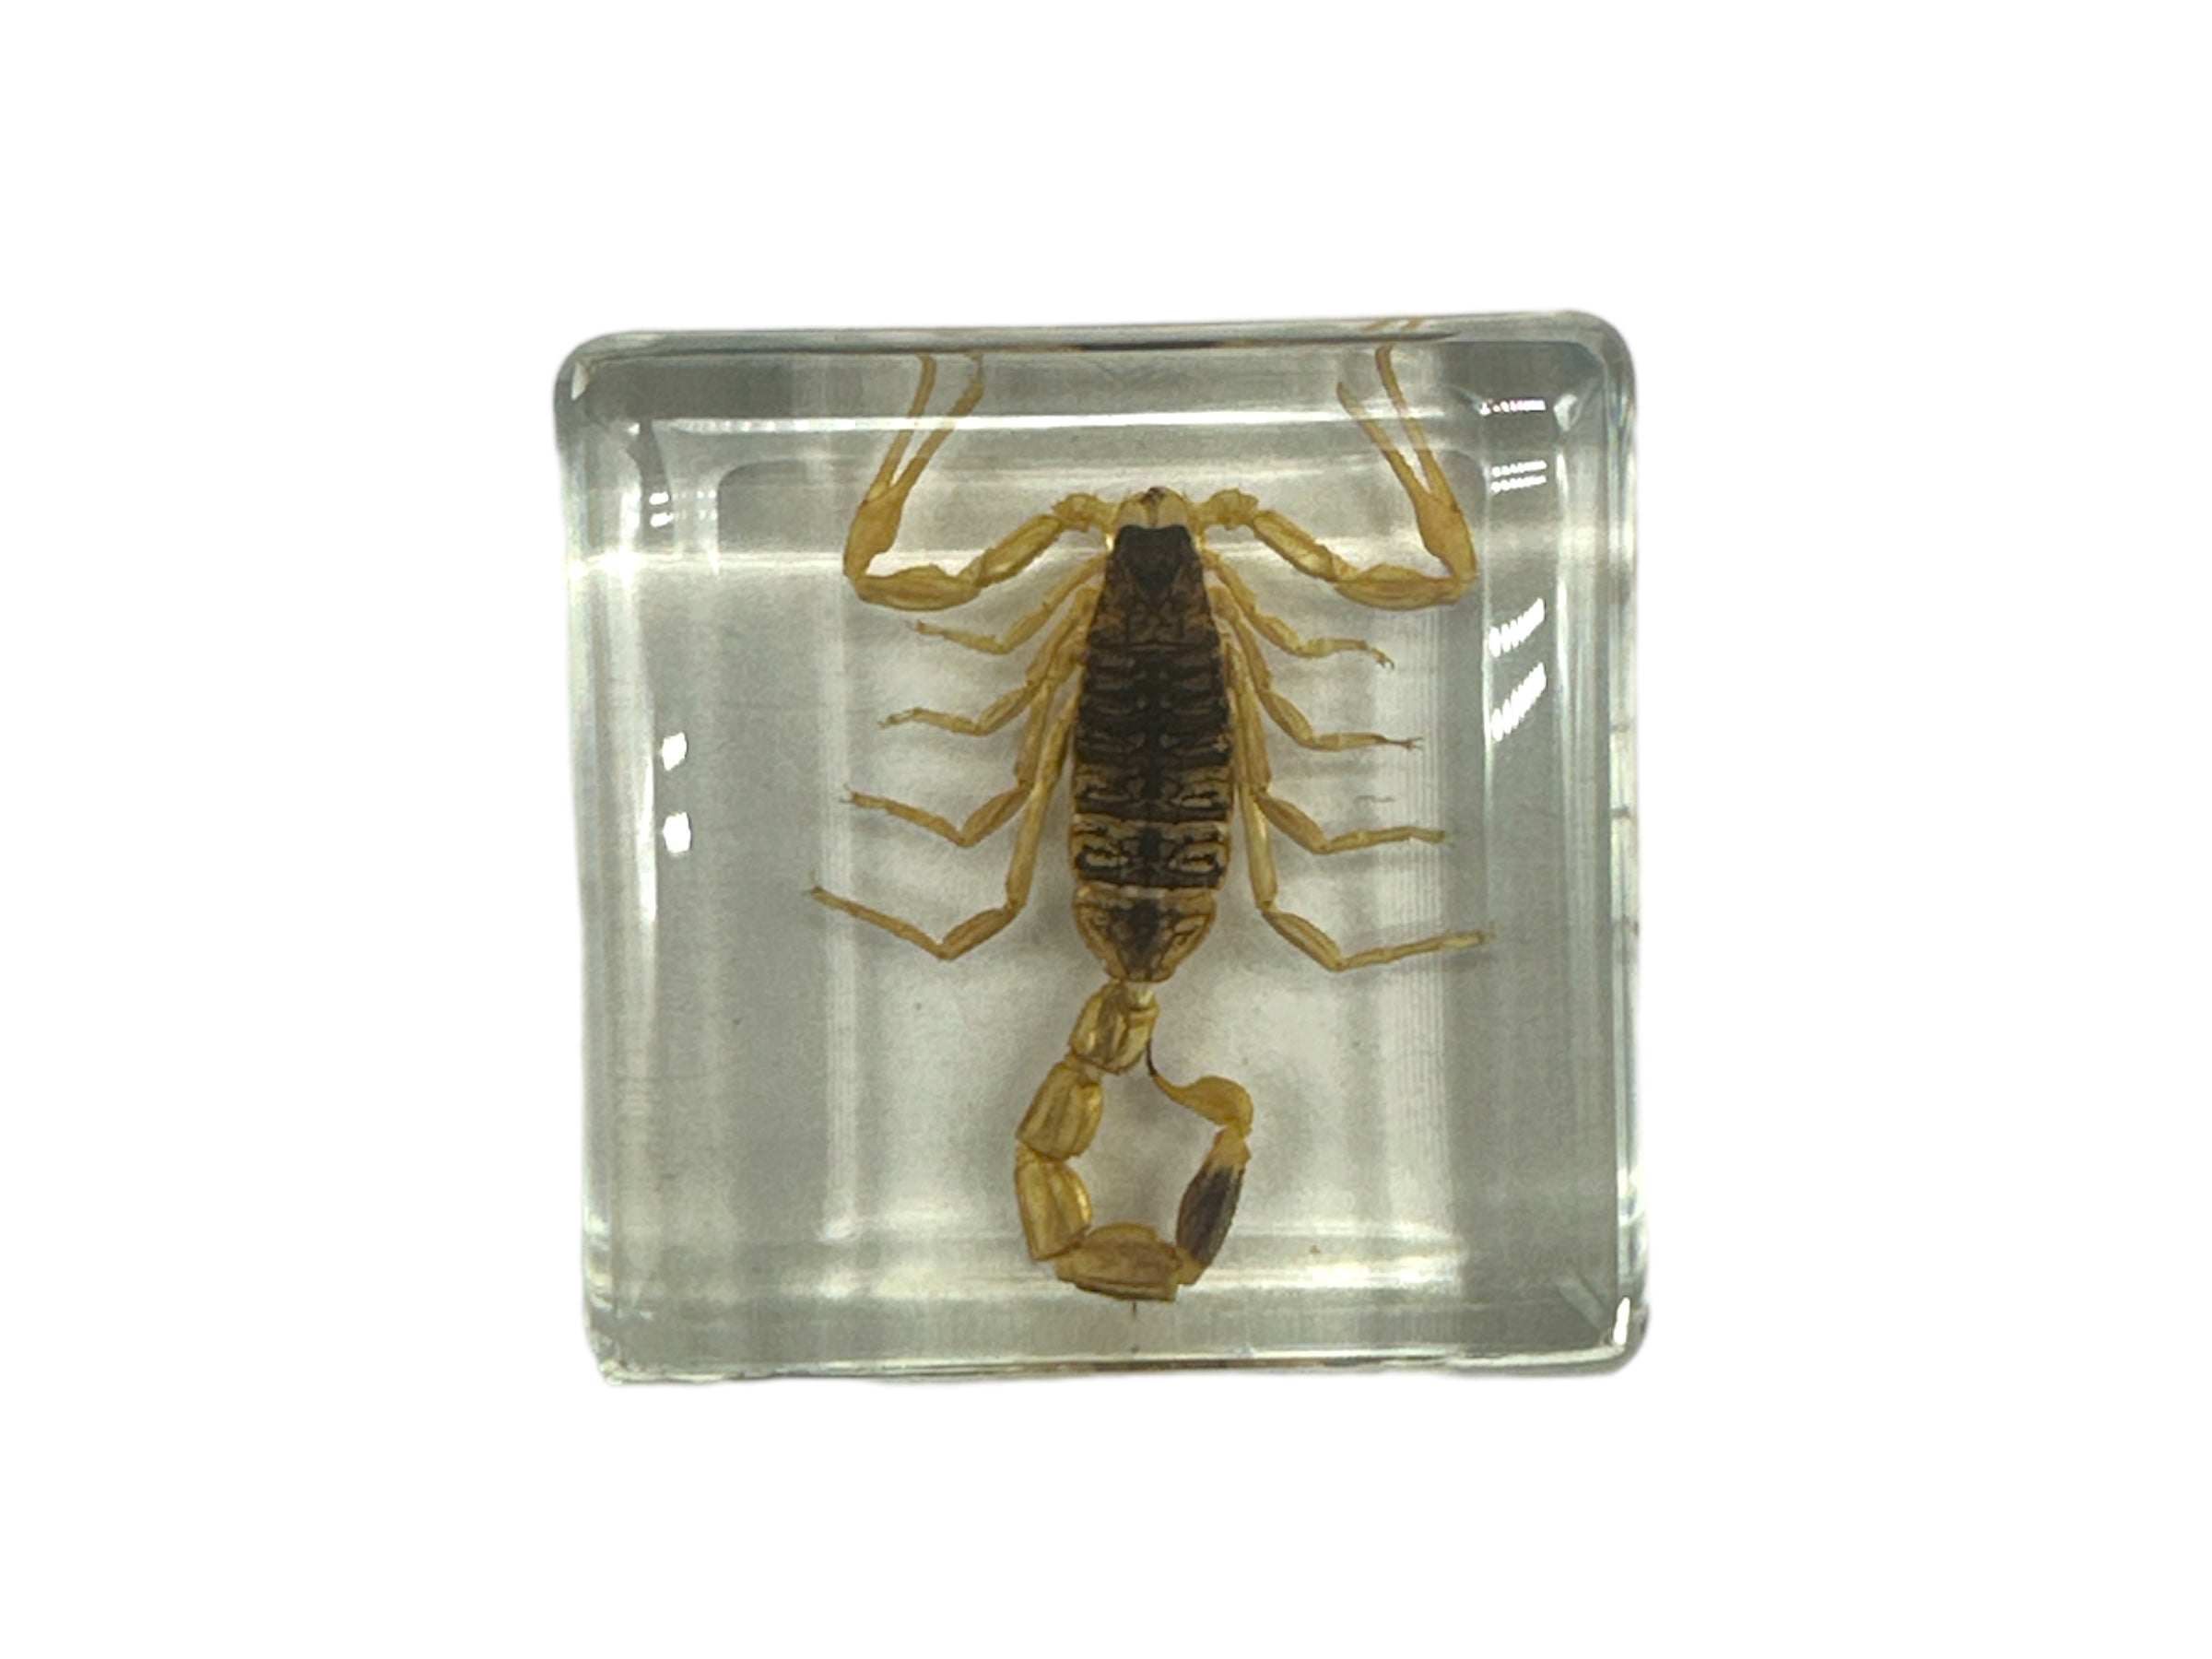 Golden Scorpion - Specimen In Resin